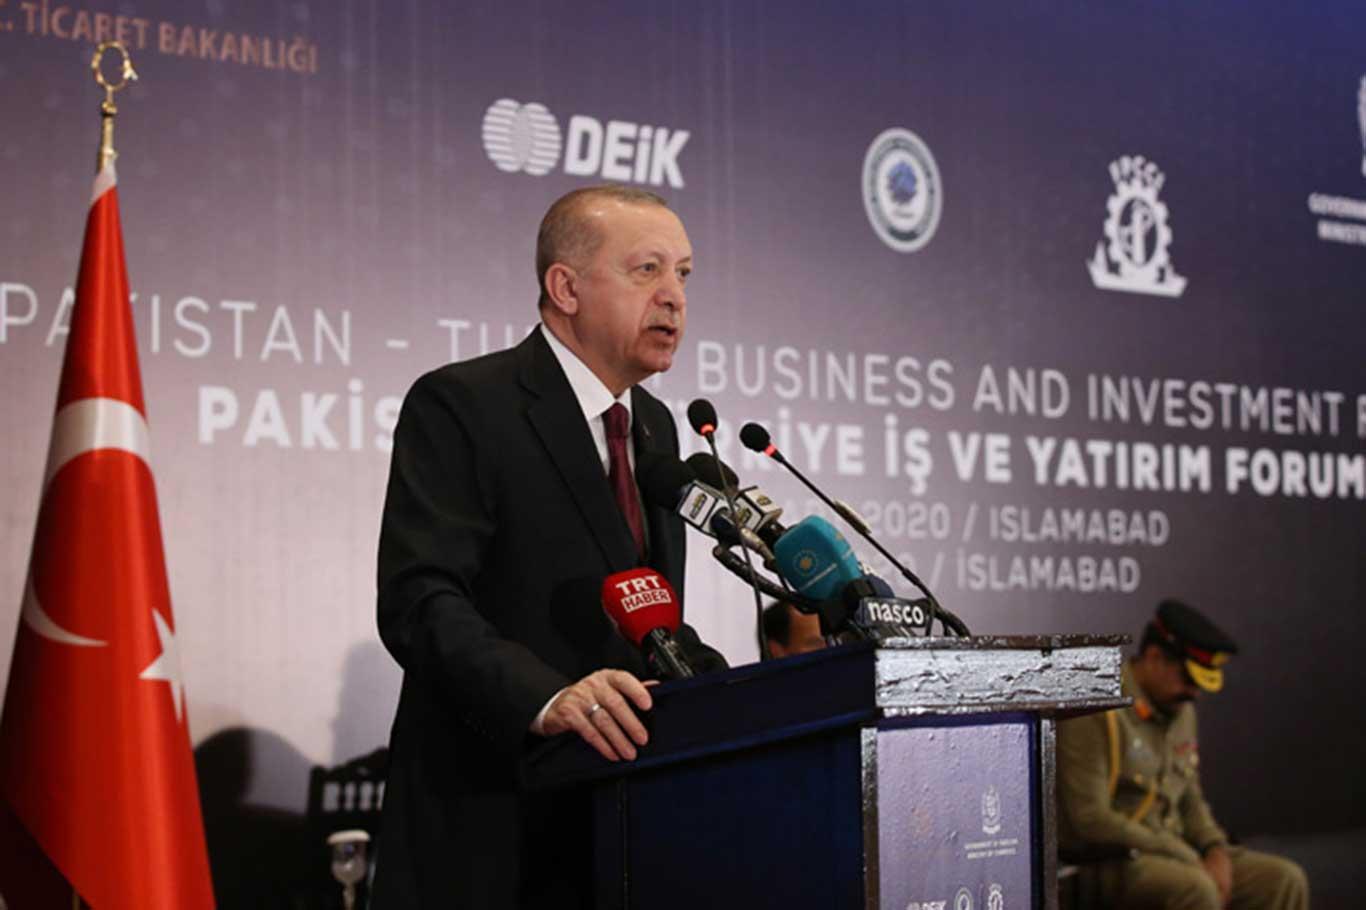 Turkey wants to raise its trade and economic ties with Pakistan, Erdoğan says